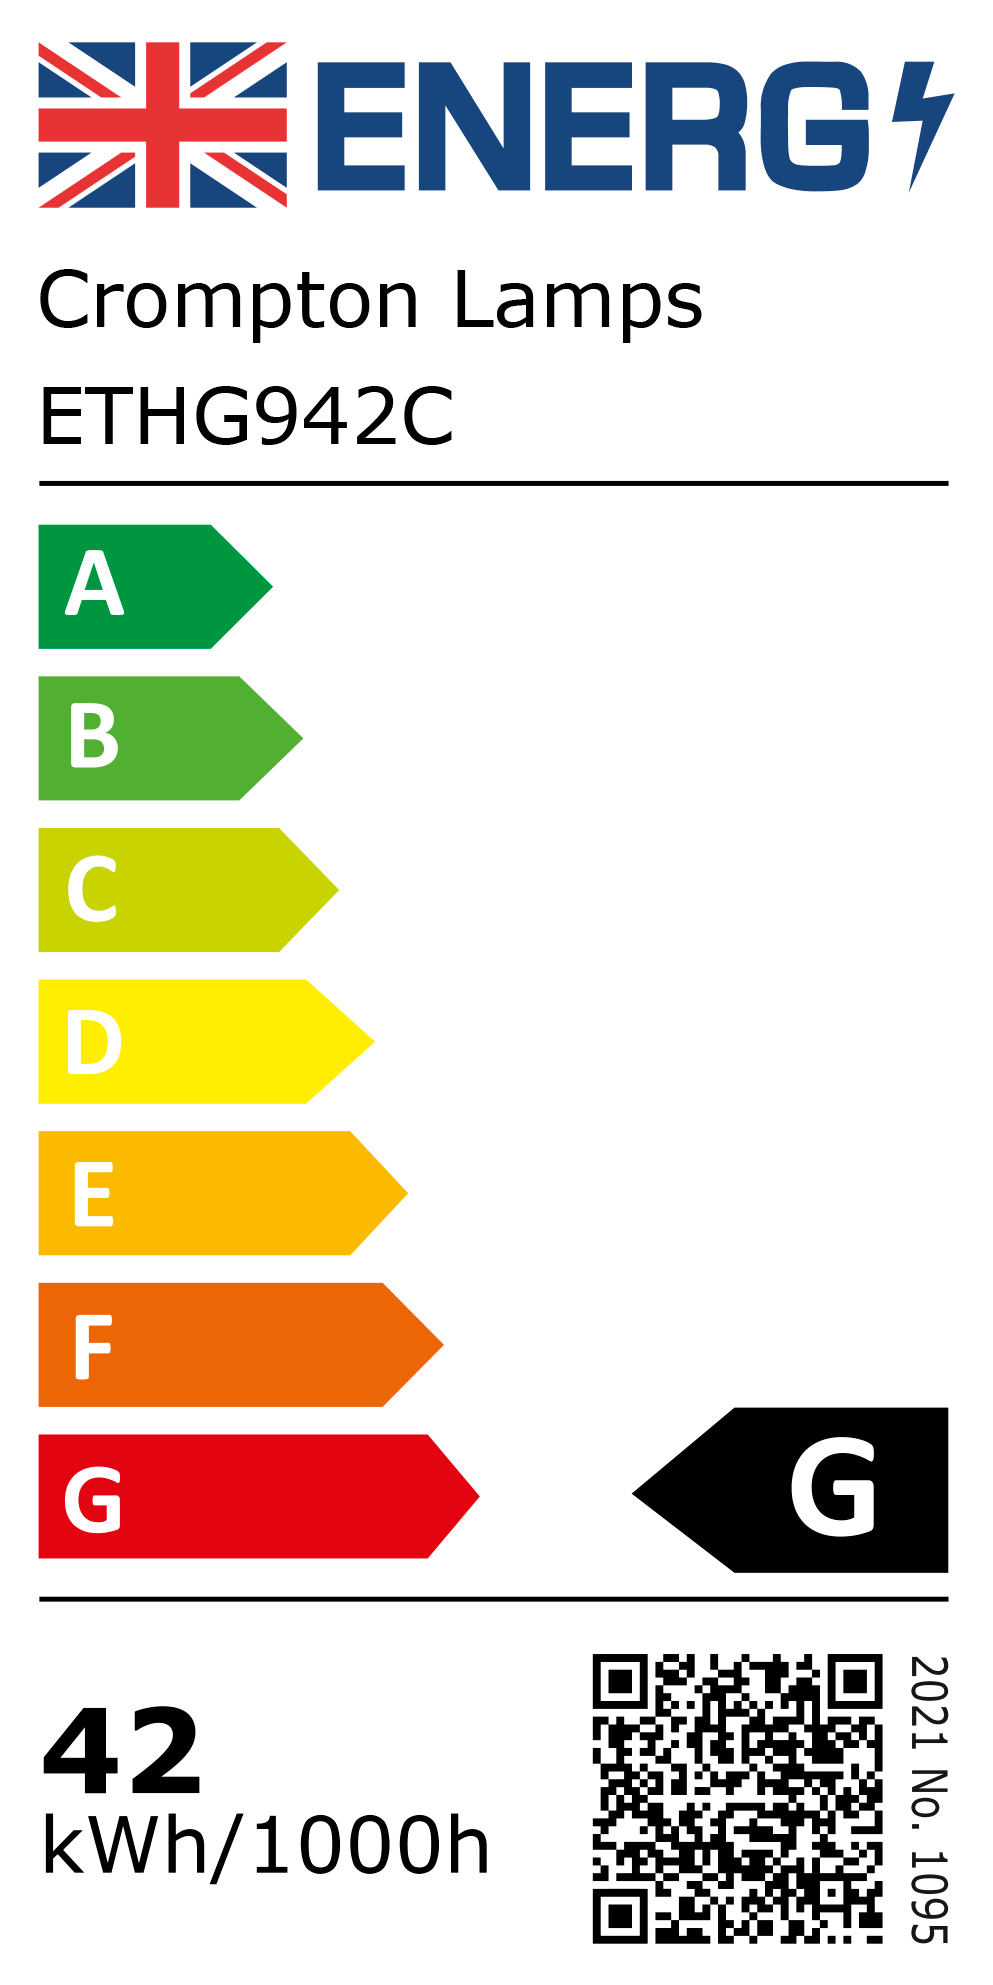 New 2021 Energy Rating Label: Stock Code ETHG942C